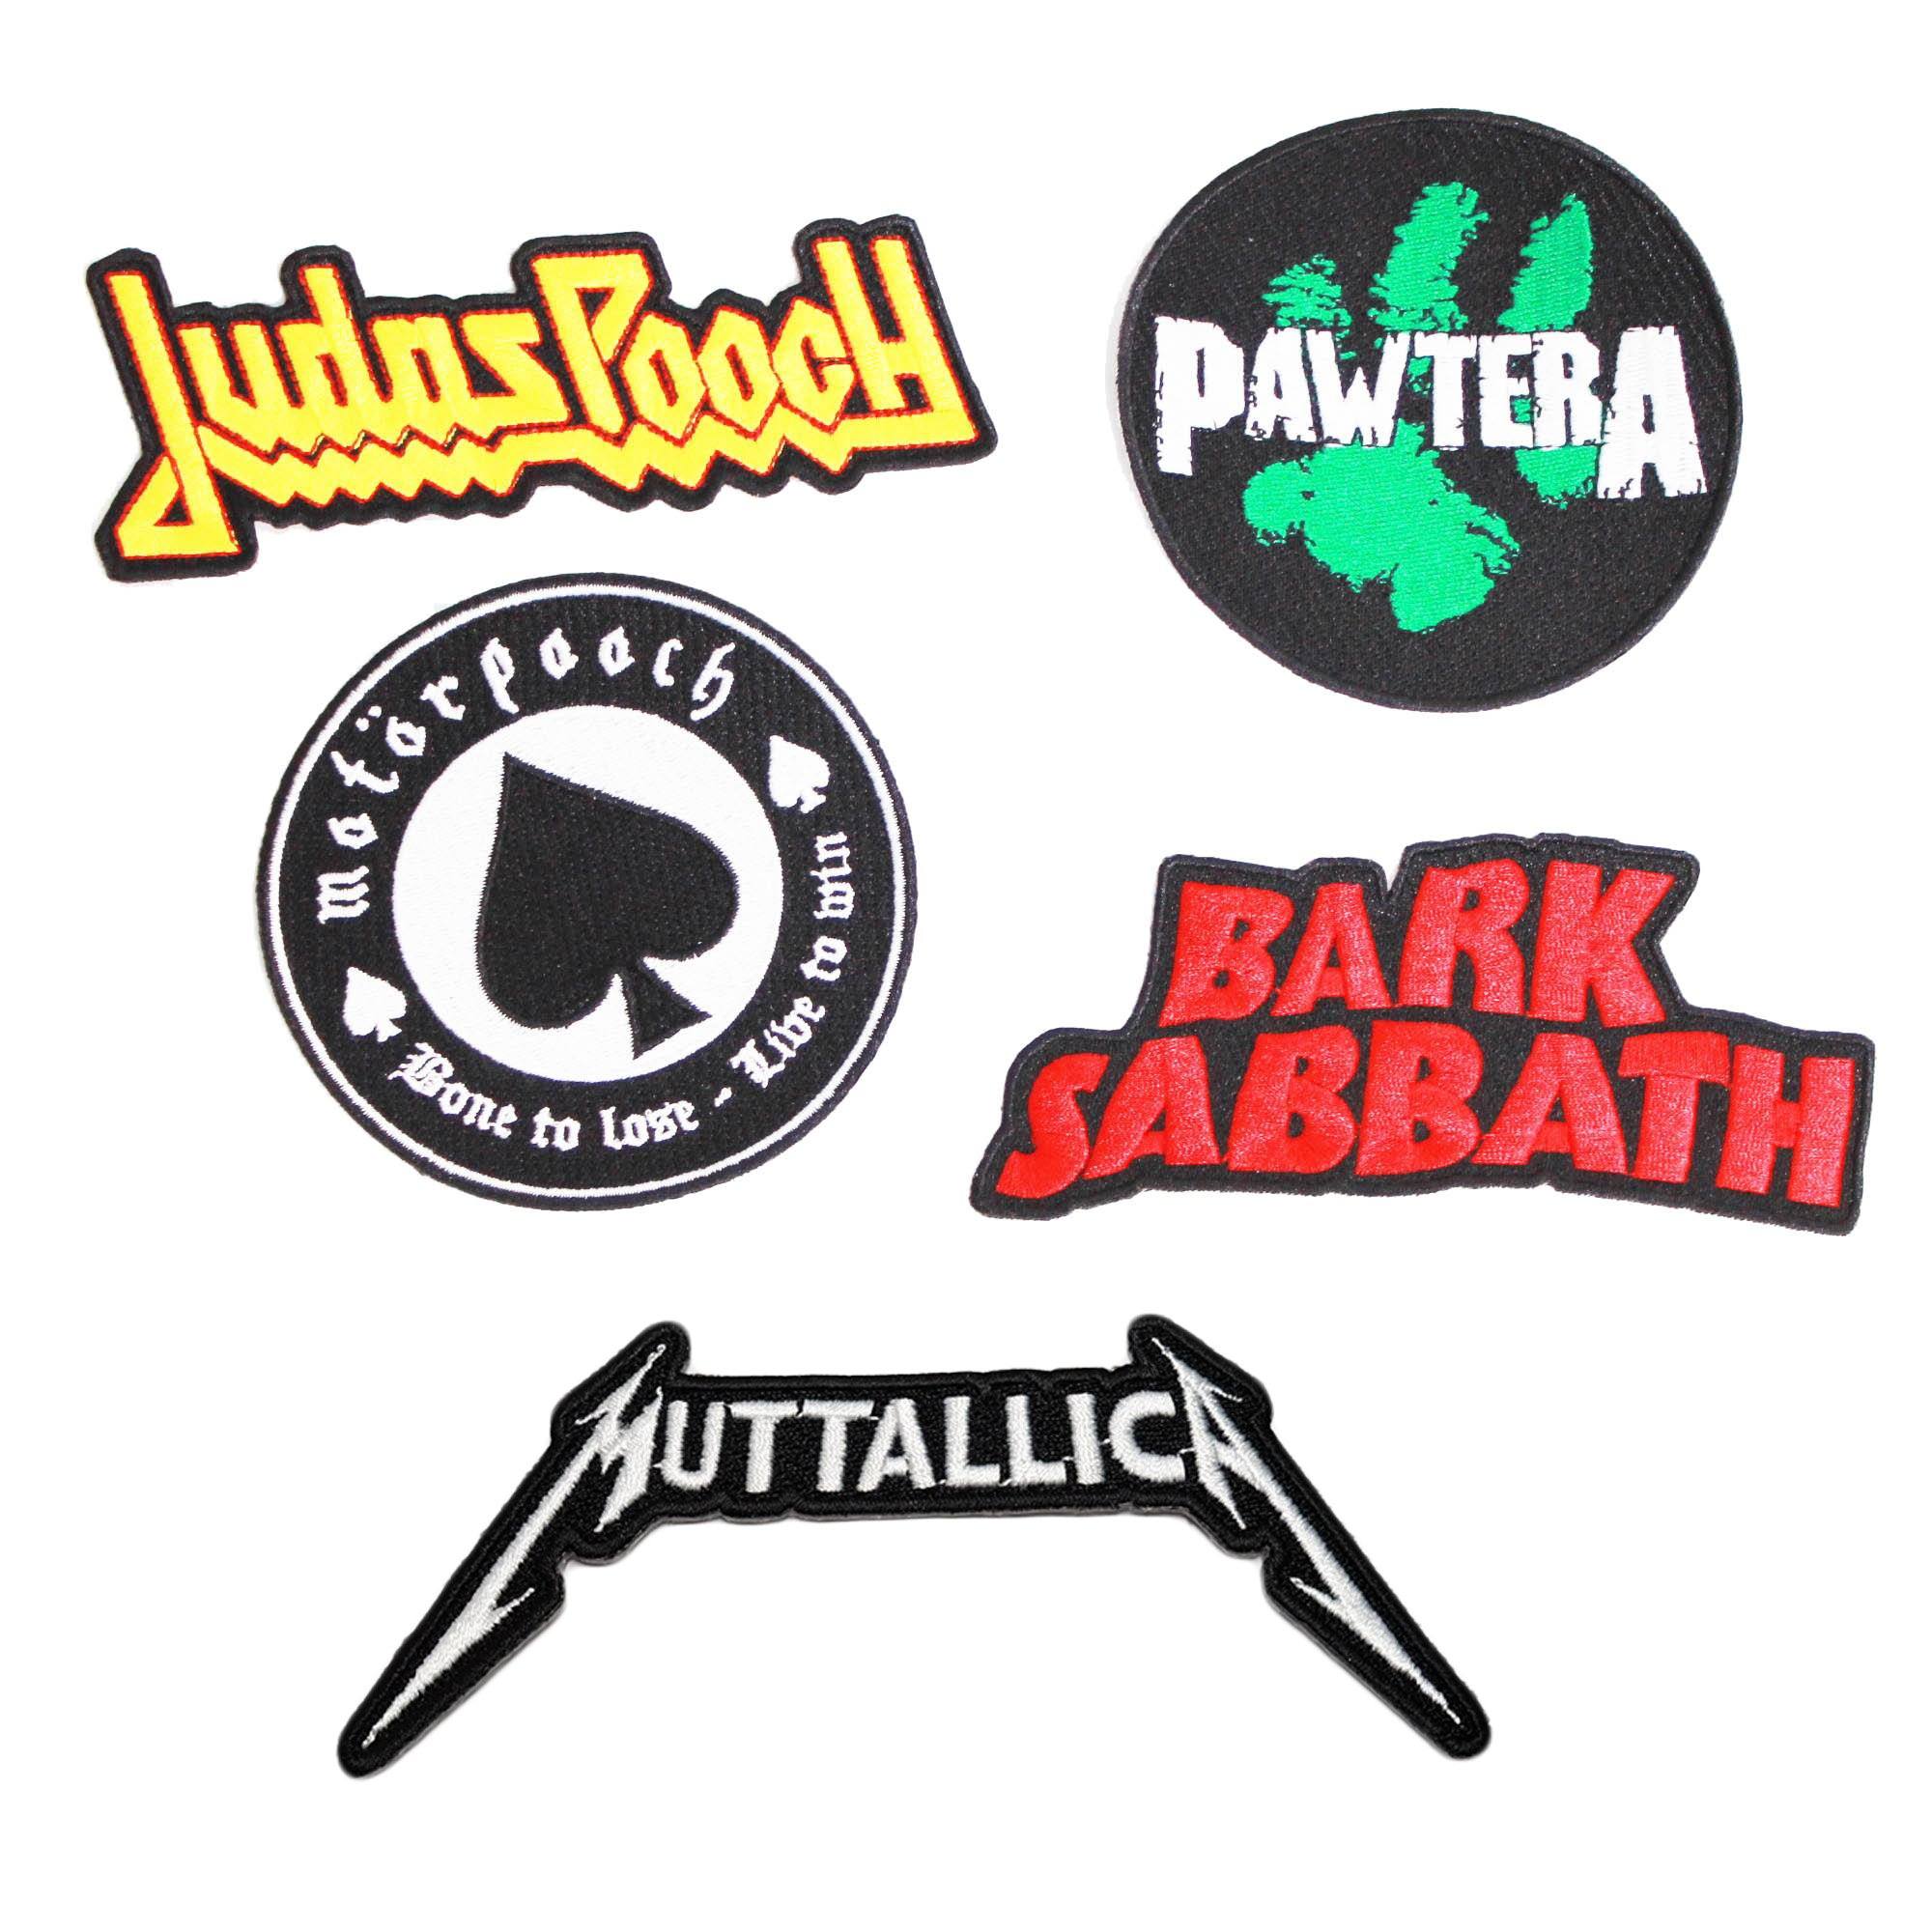 Metal Dog, Heavy Metal Dog, Muttallica, Bark Sabbath, Pawtera, Dog patches